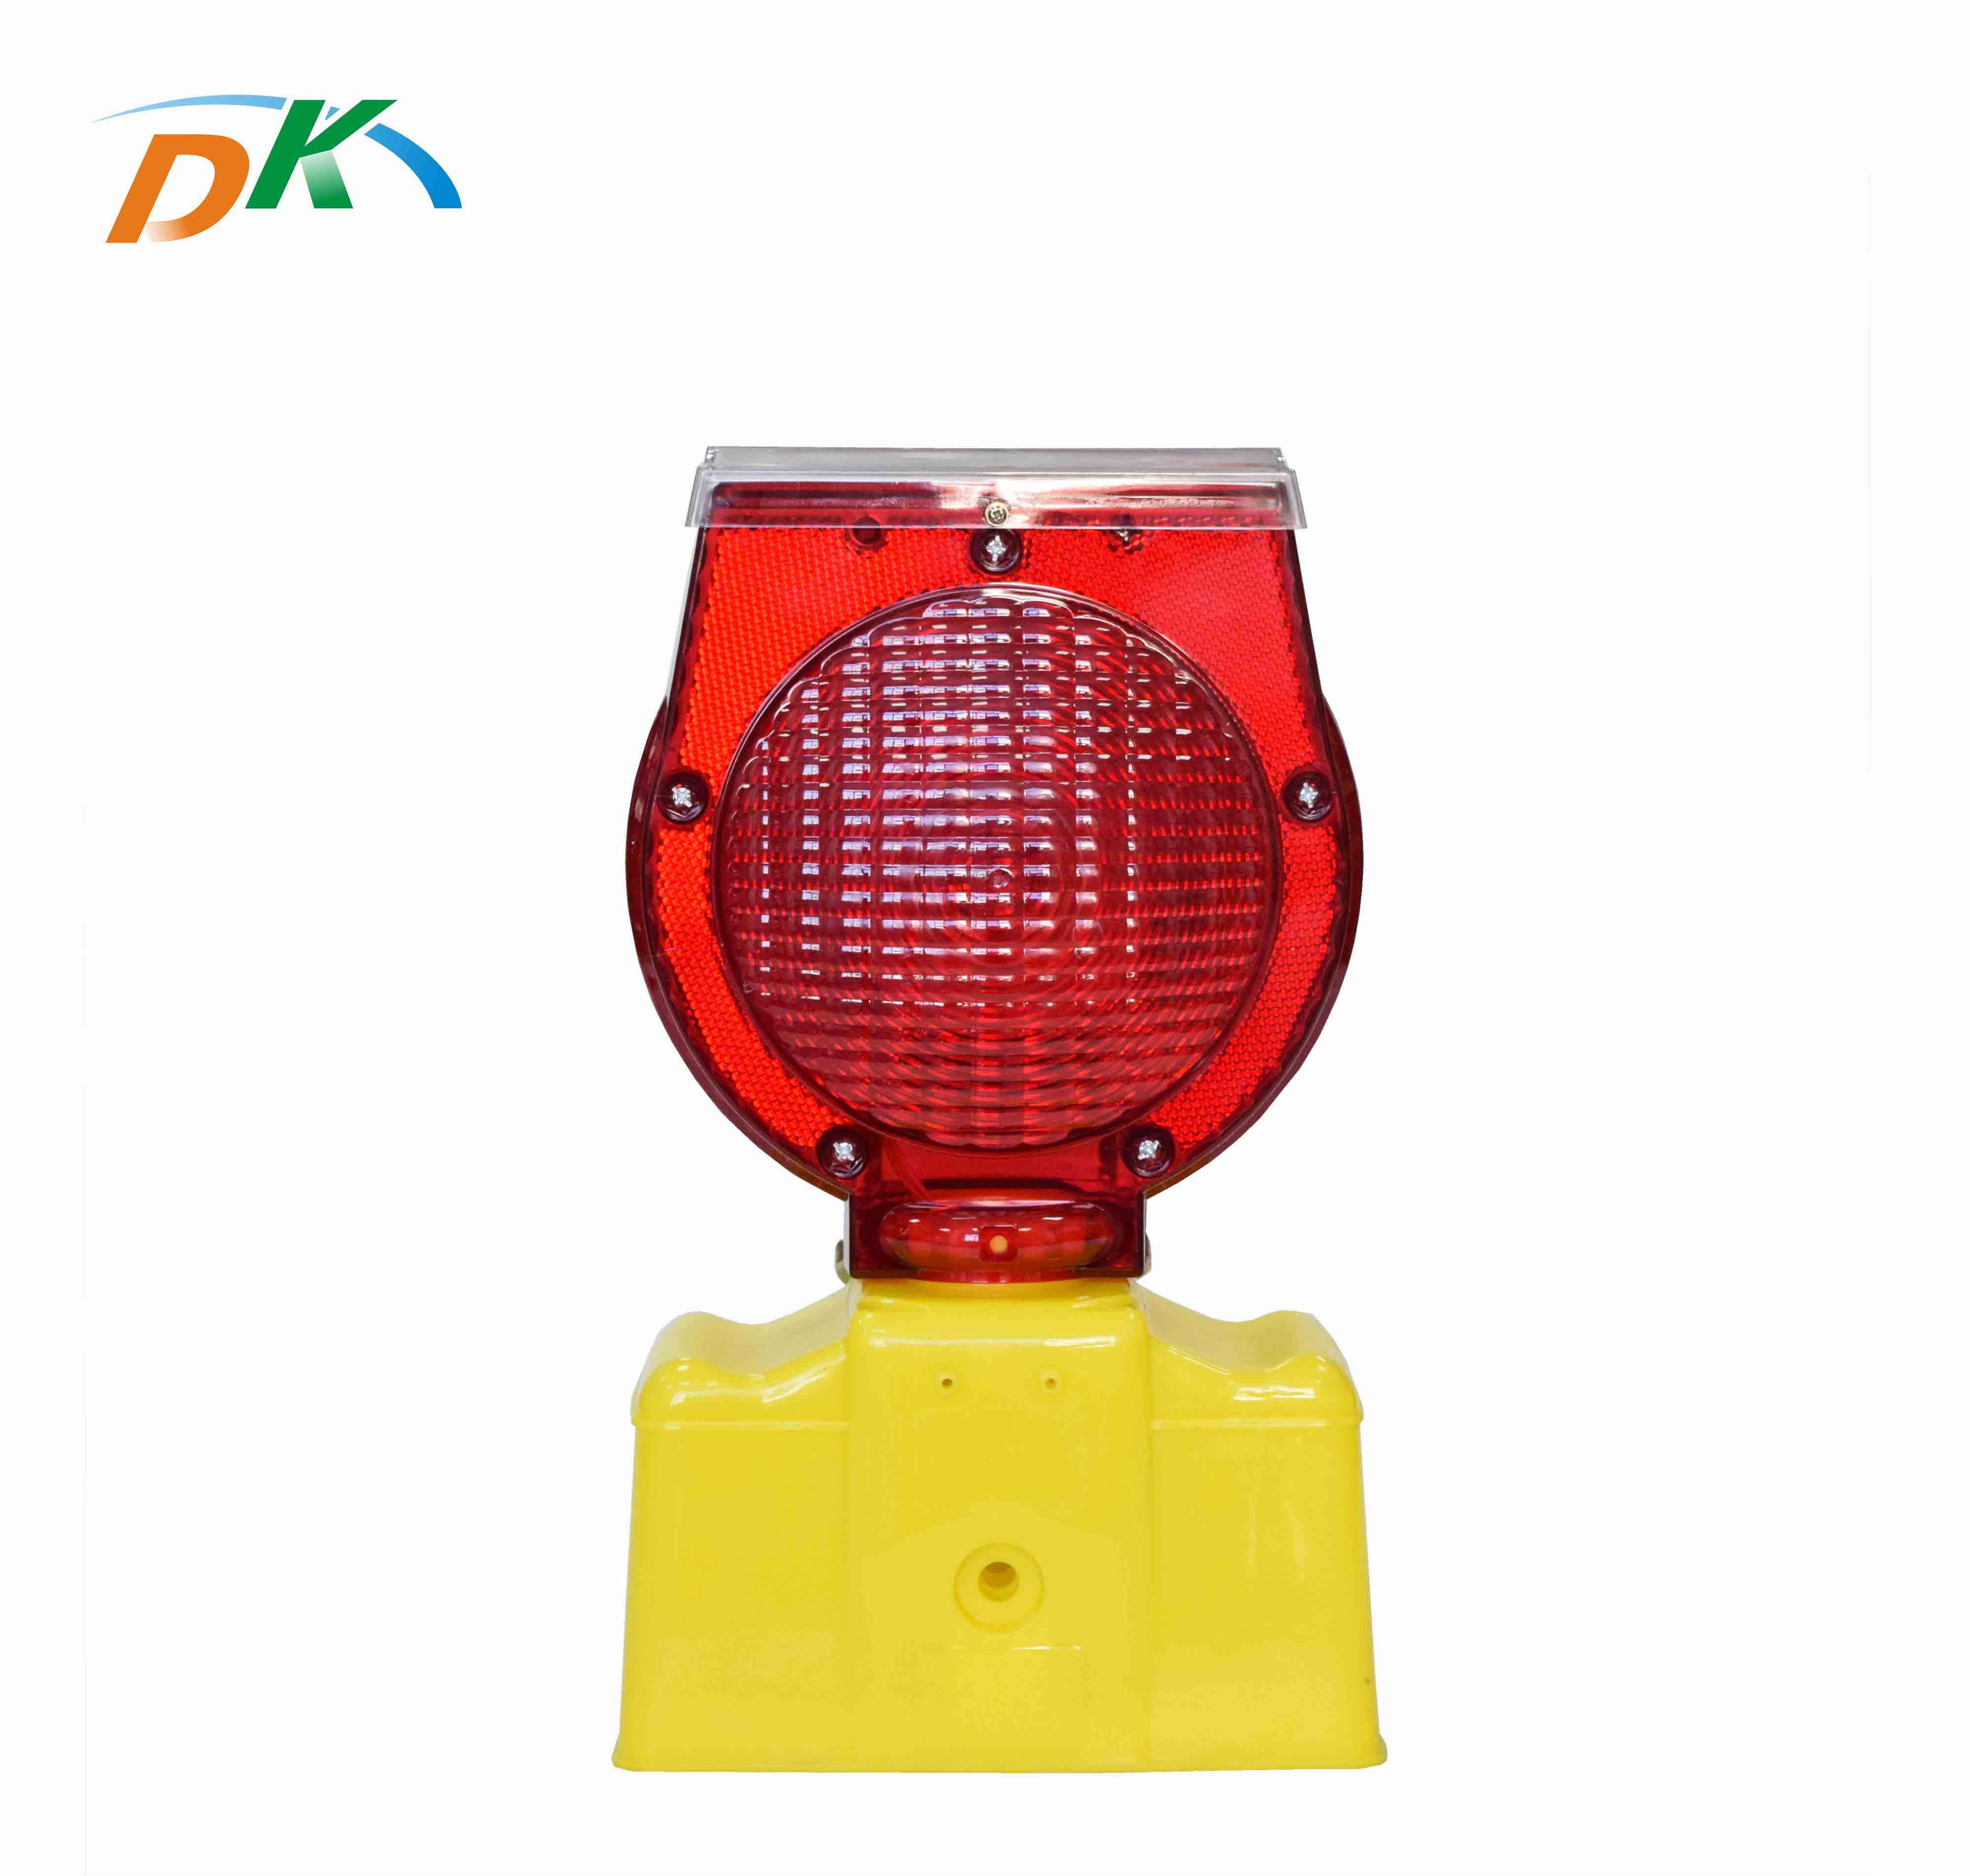 DK Solor Signal Construction Blinker Light Traffic Barricade Lamp